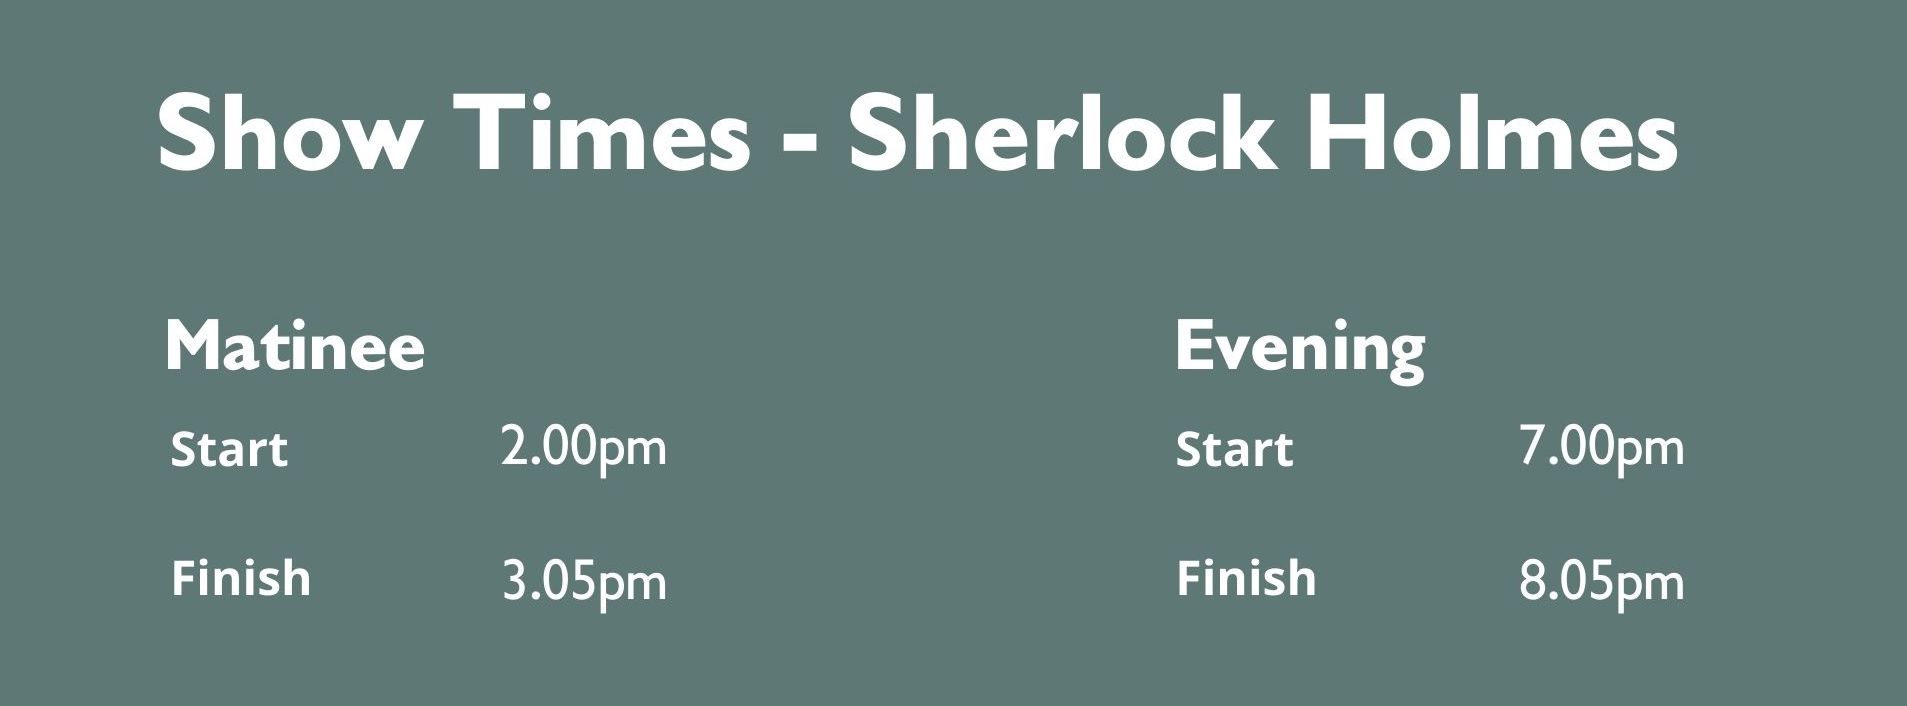 Show Times - Sherlock Holmes